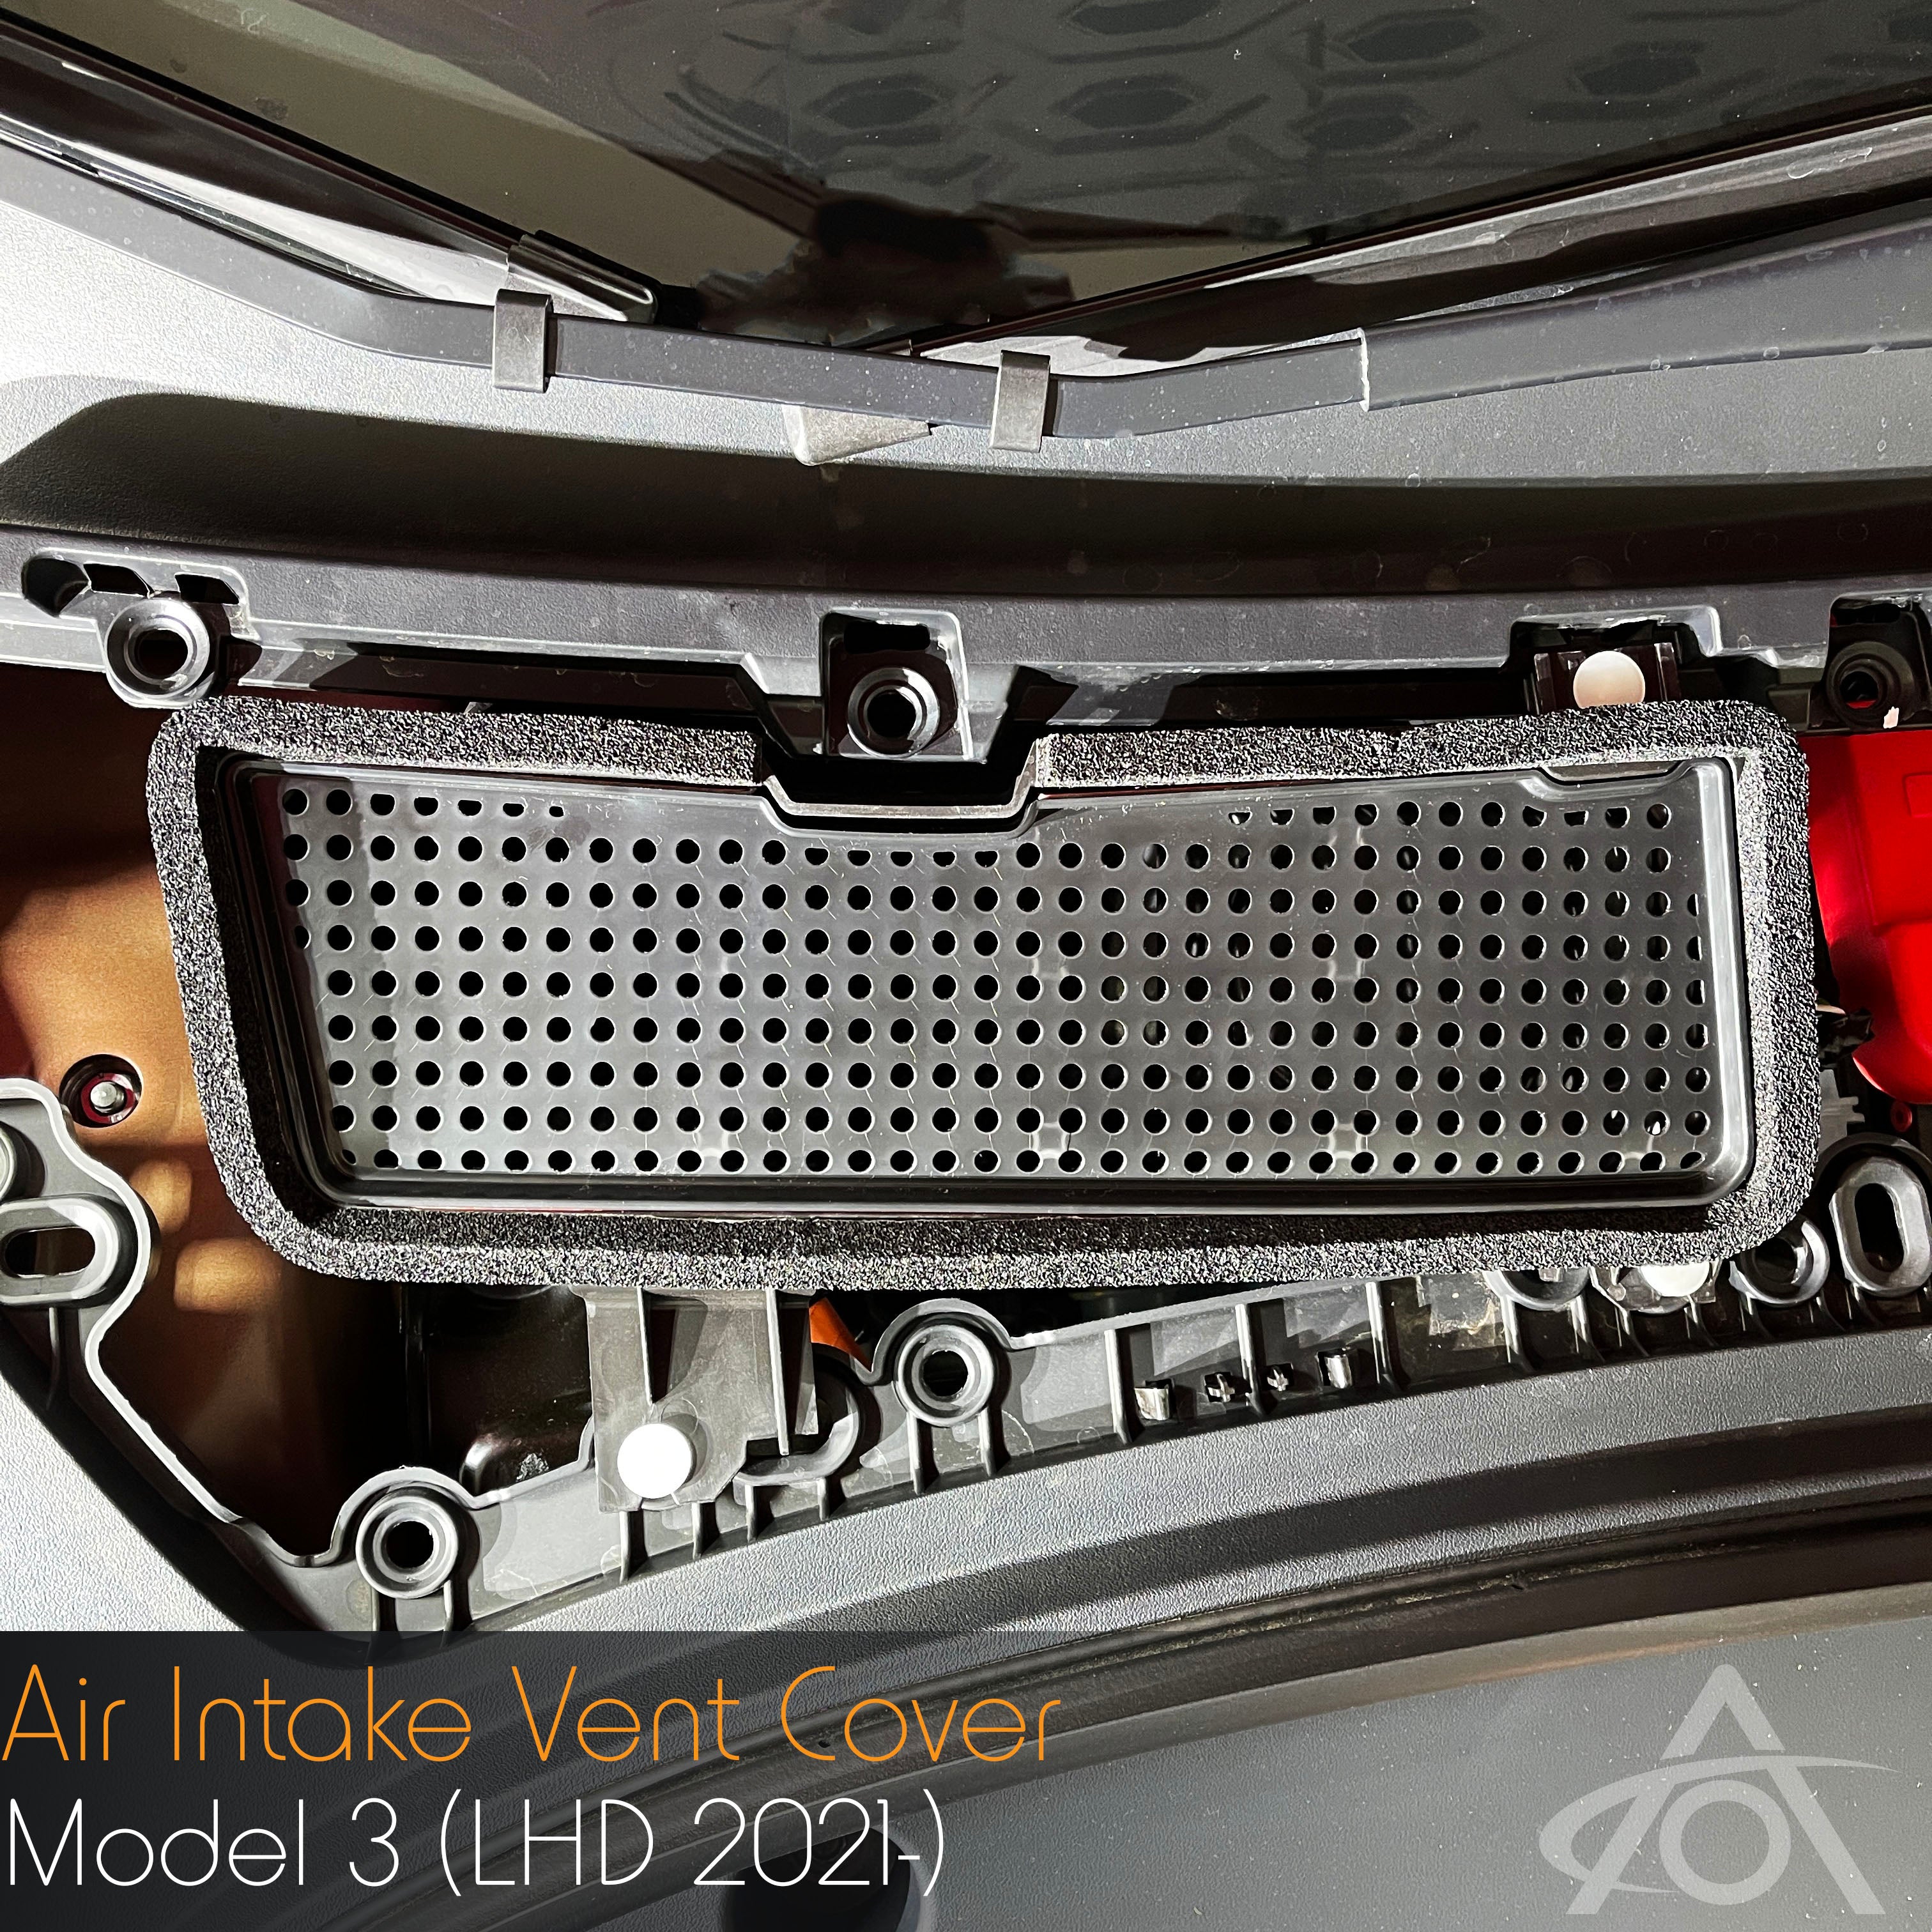 Model 3 Air Intake Vent Cover